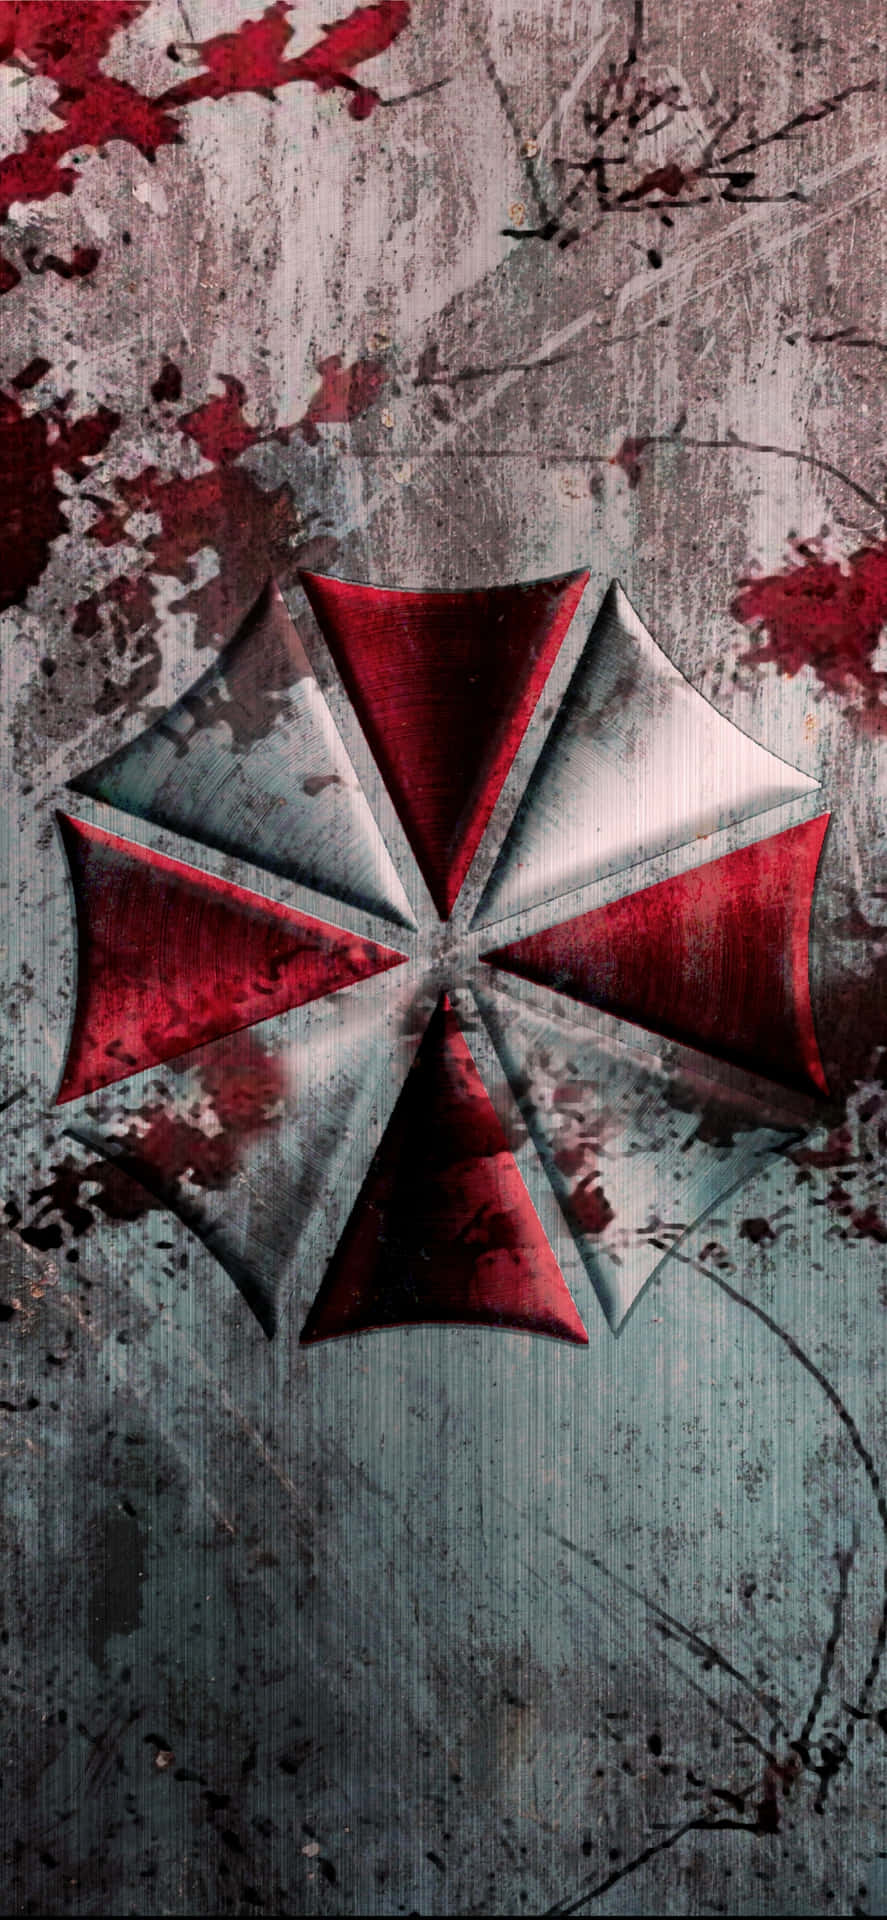 Logode Resident Evil En Plata Y Rojo Para Iphone Fondo de pantalla